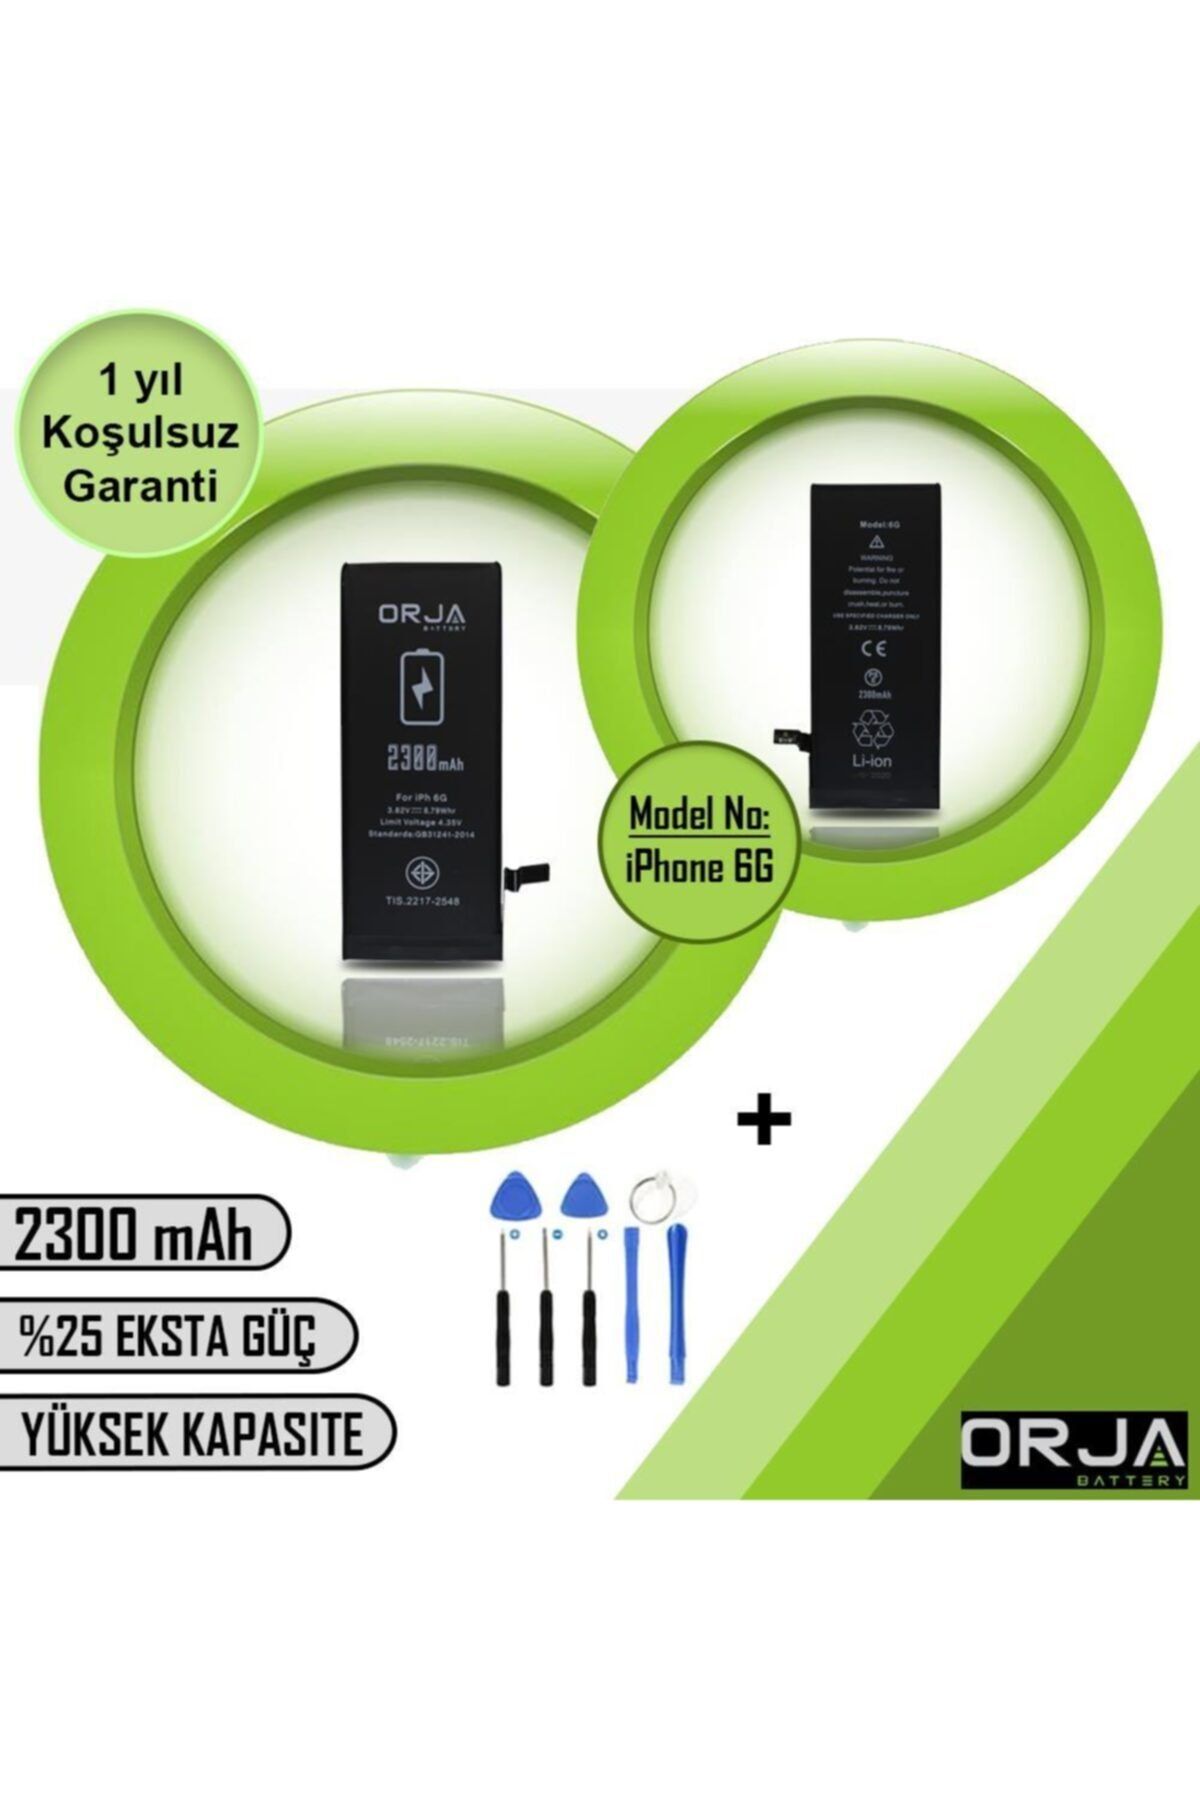 ORJA Iphone 6 Batarya Pil 2300 Mah Yüksek Kapasite Batarya